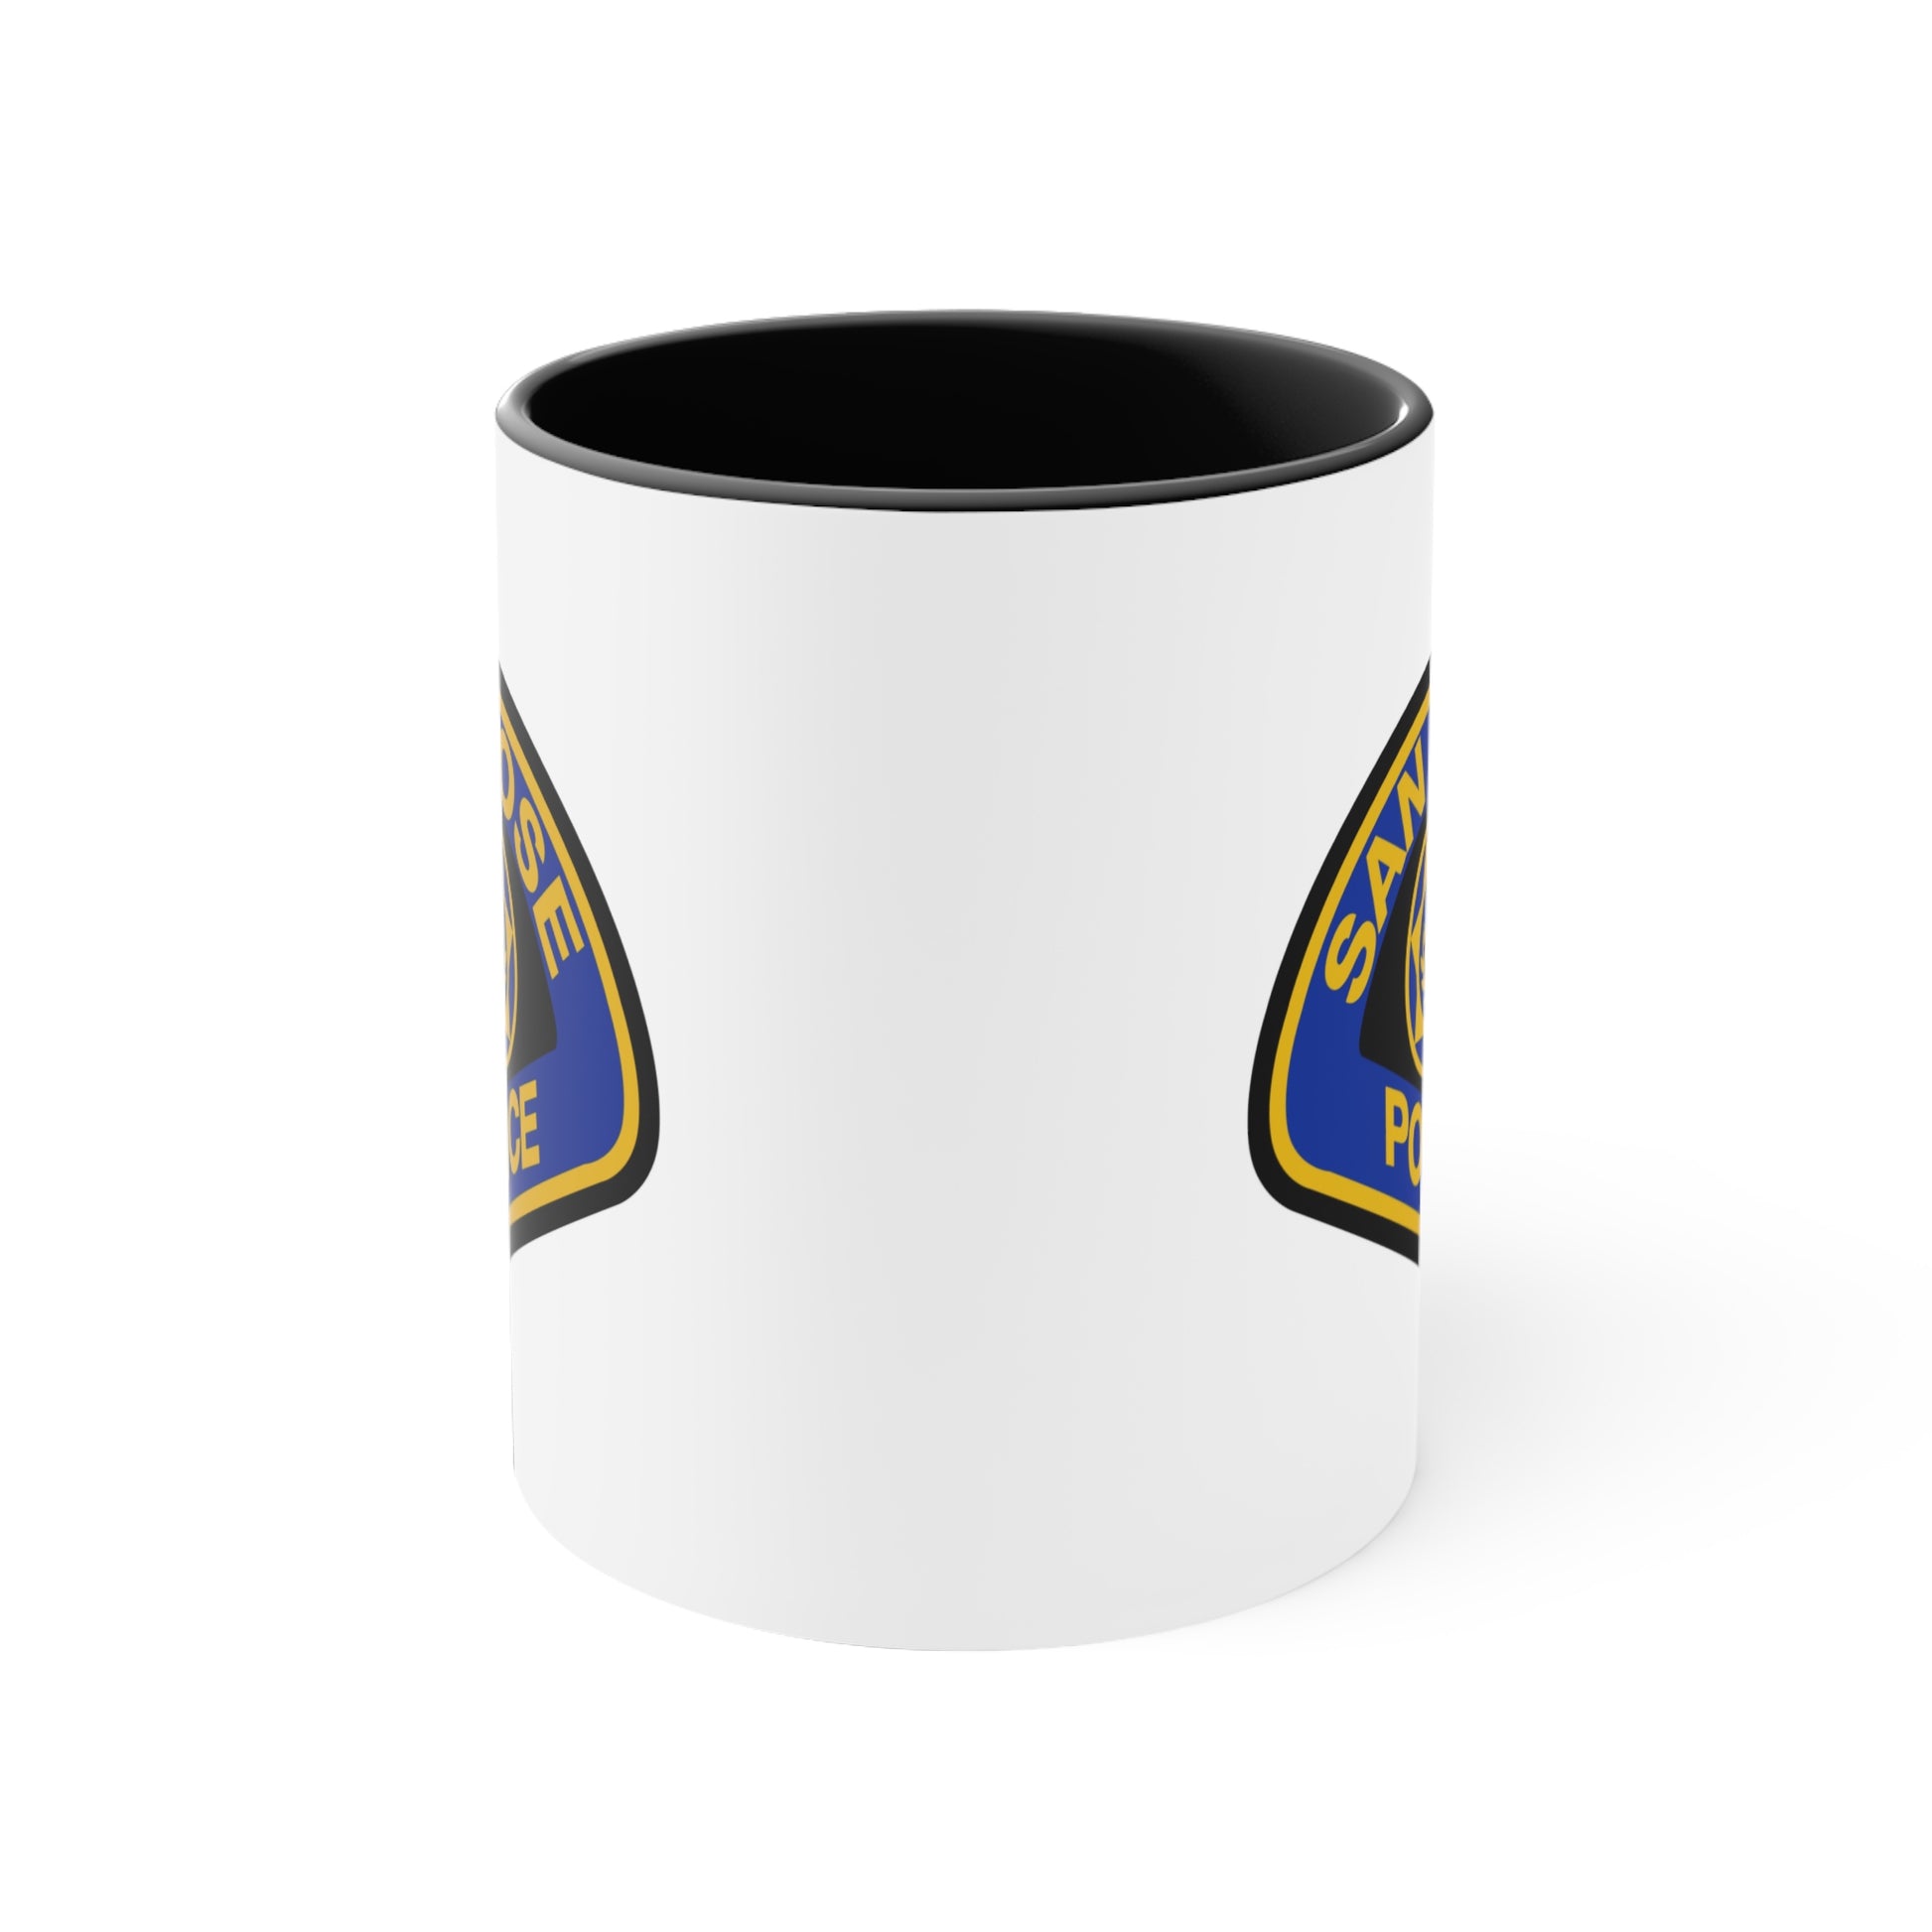 San Jose Police Coffee Mug - Doubles Sided Black Accent White Ceramic 11oz by TheGlassyLass.com